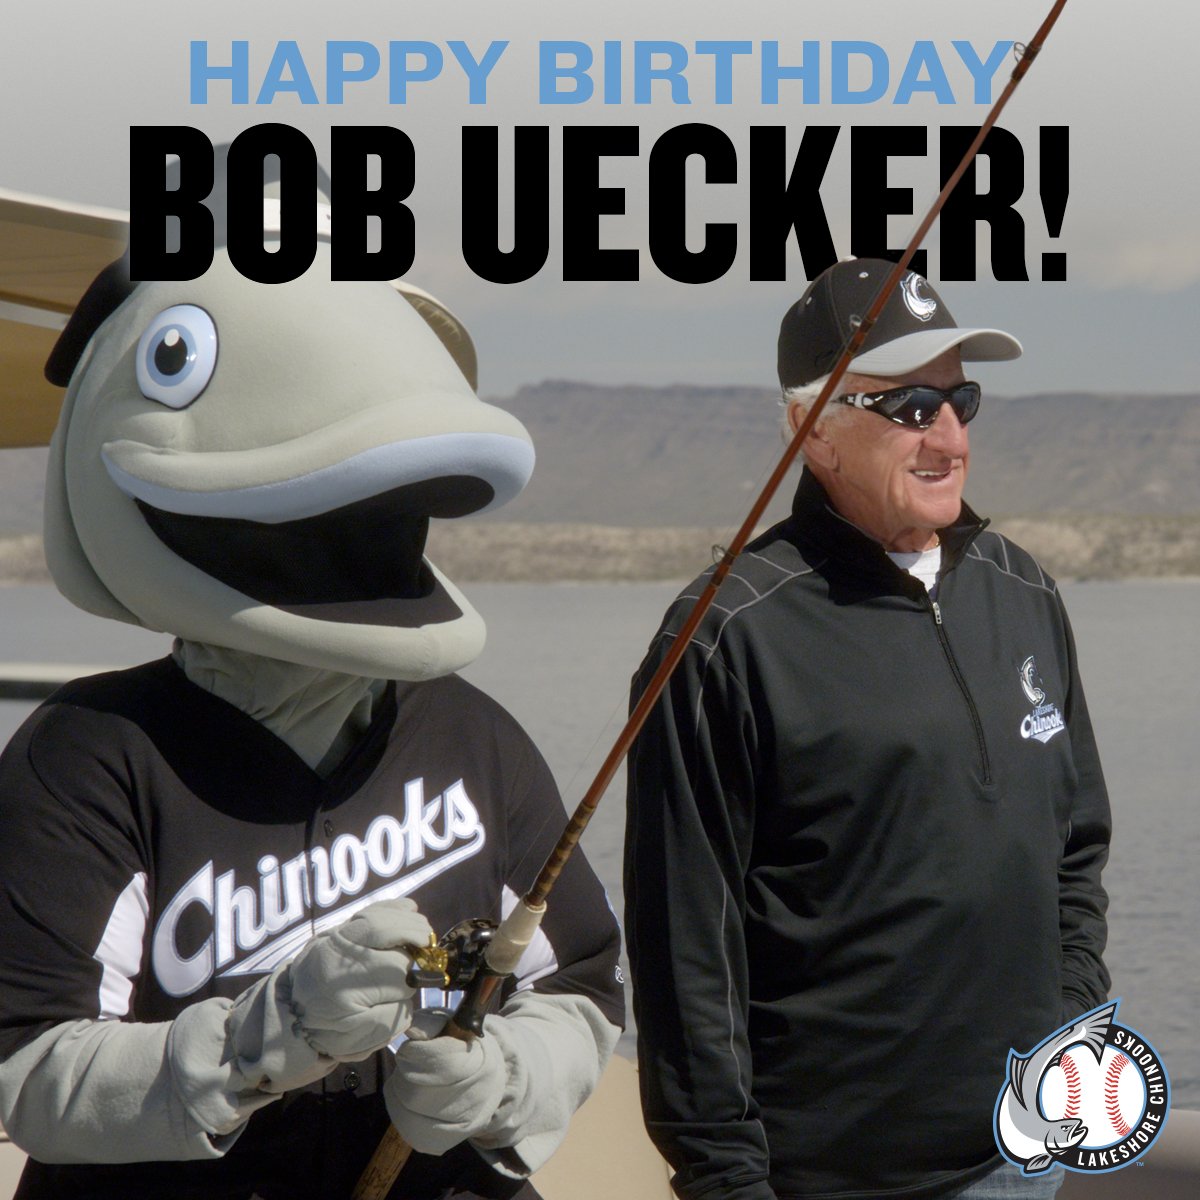 Happy birthday, Bob Uecker